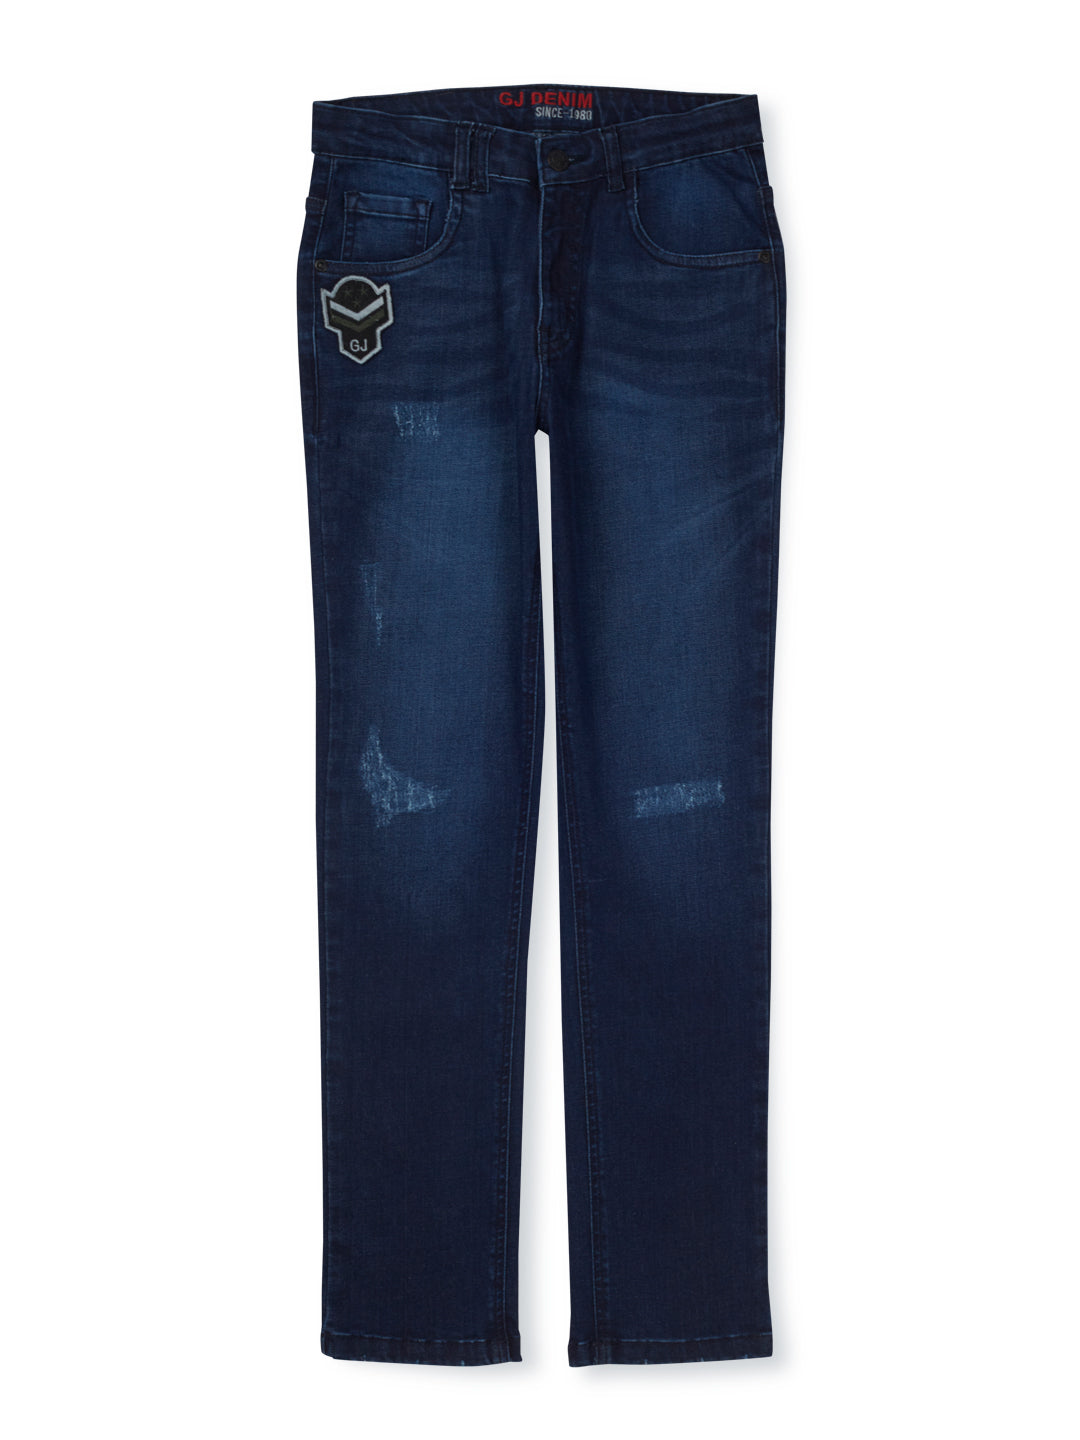 Boys Navy Blue Cotton Denim Solid Jeans